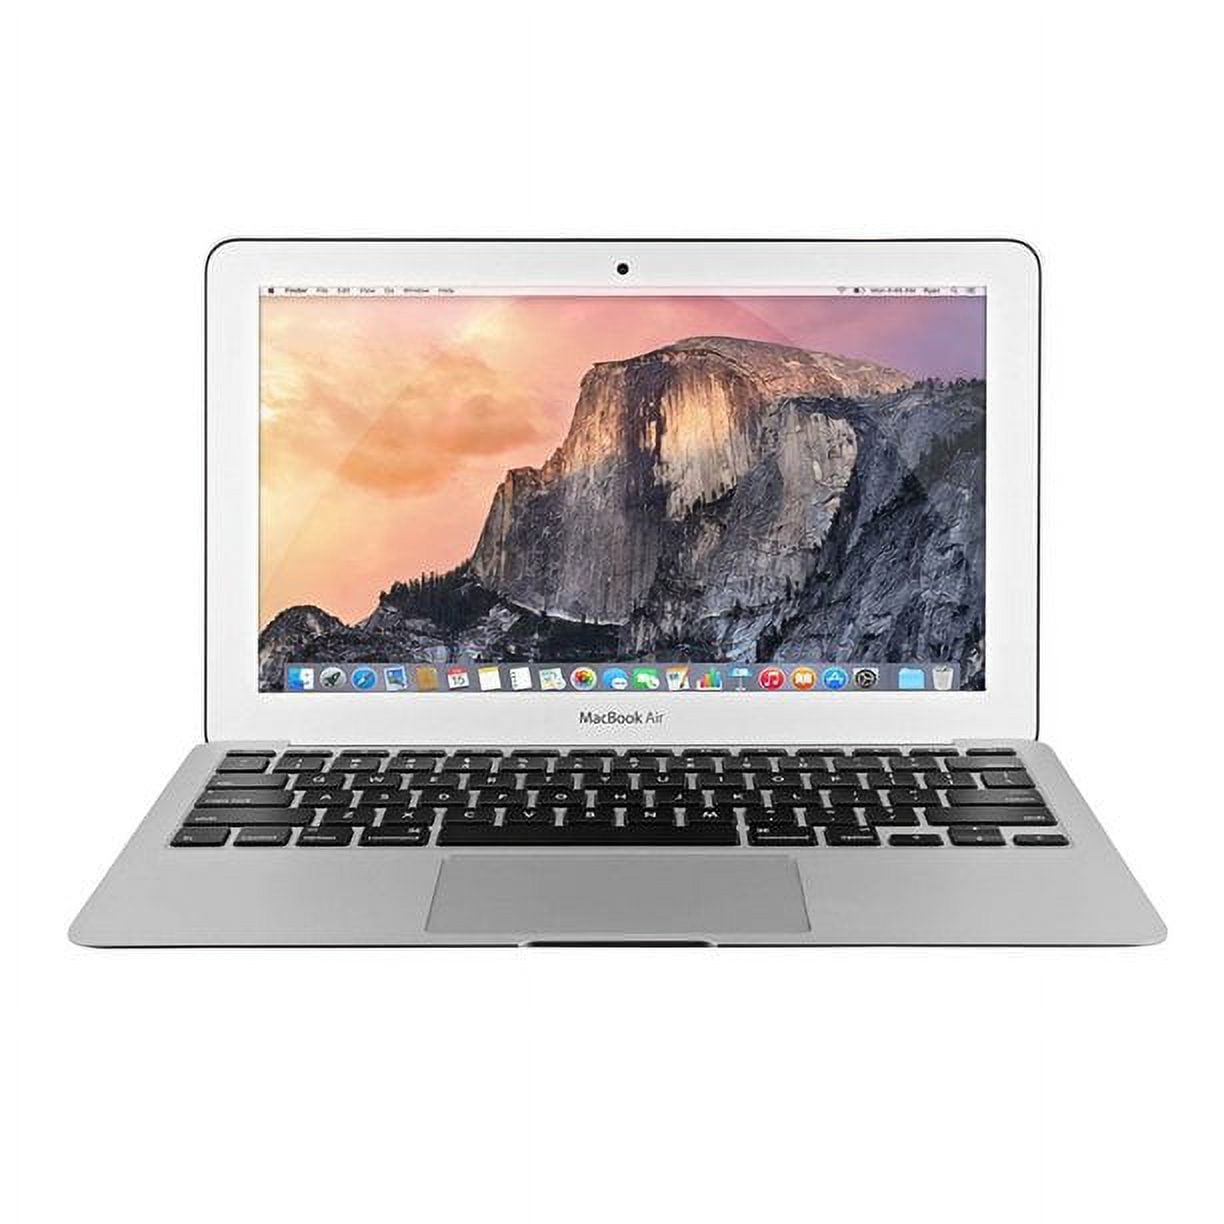 Restored Apple MacBook Air 11.6in MD711LL/B Early-2014 - Intel Core  i5-4260U 1.4GHz, 4GB RAM, 128GB SSD - Silver (Refurbished)